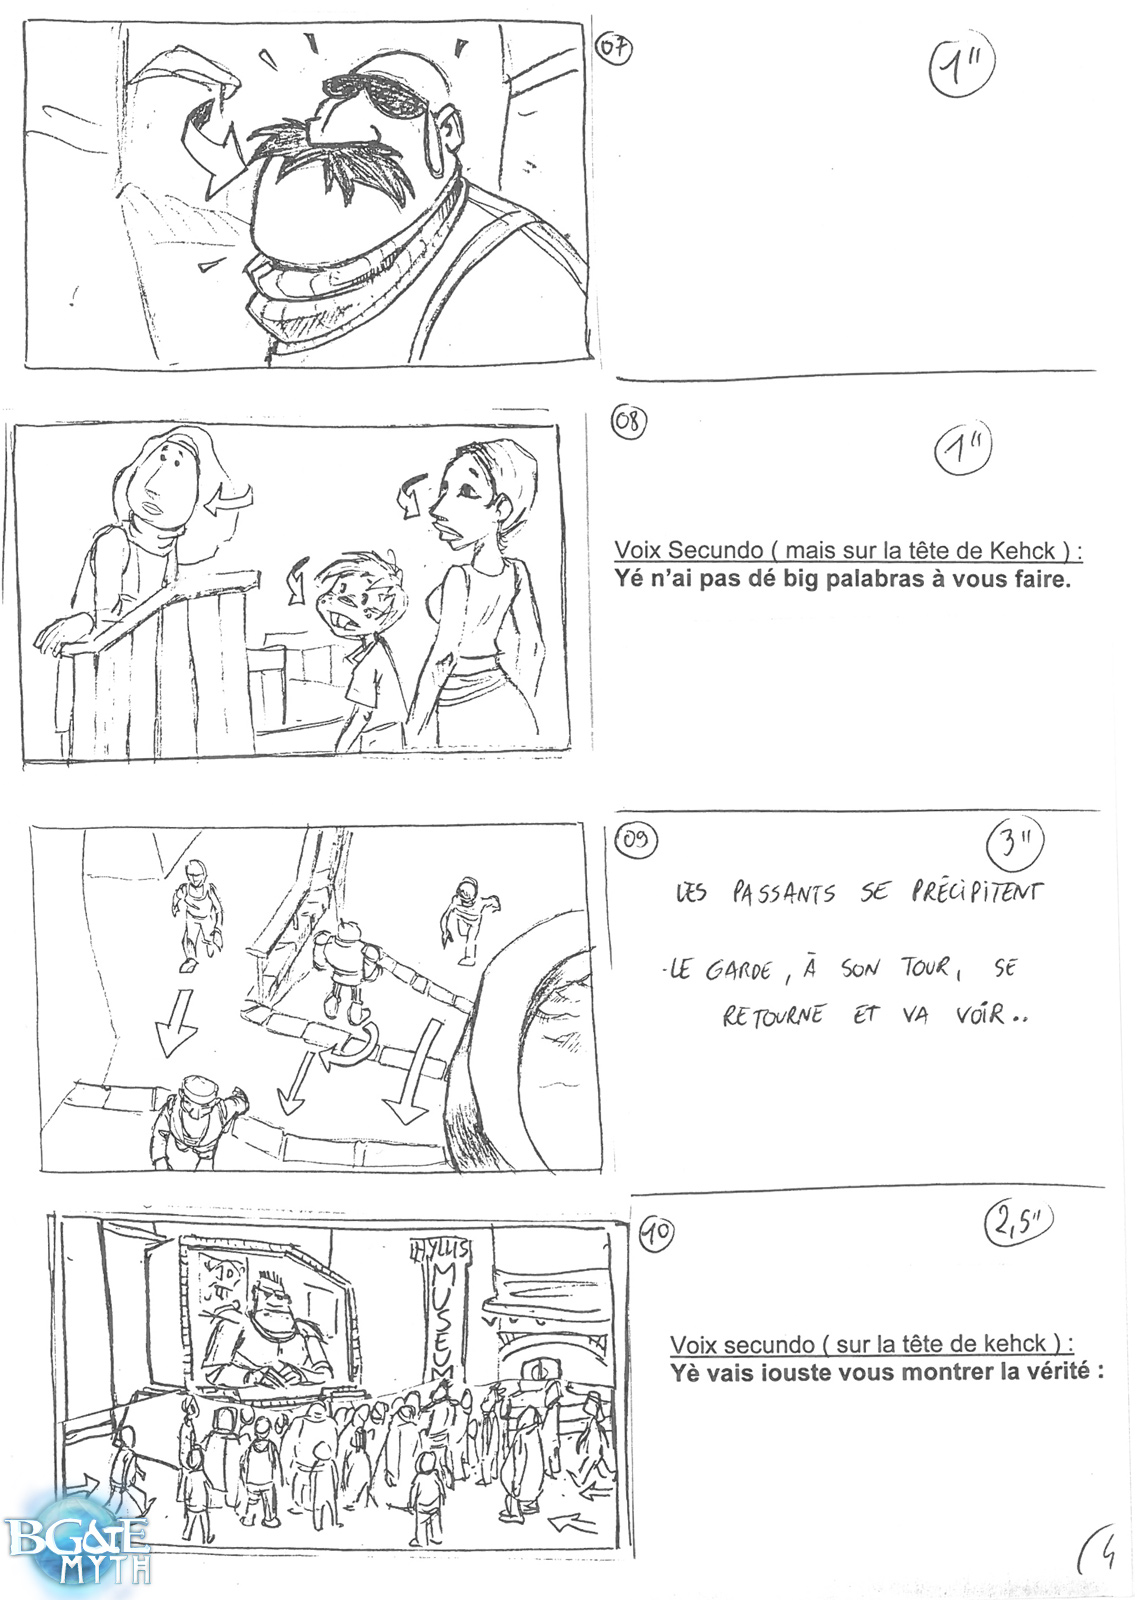 [Storyboard] Diffusion du reportage - Page 11